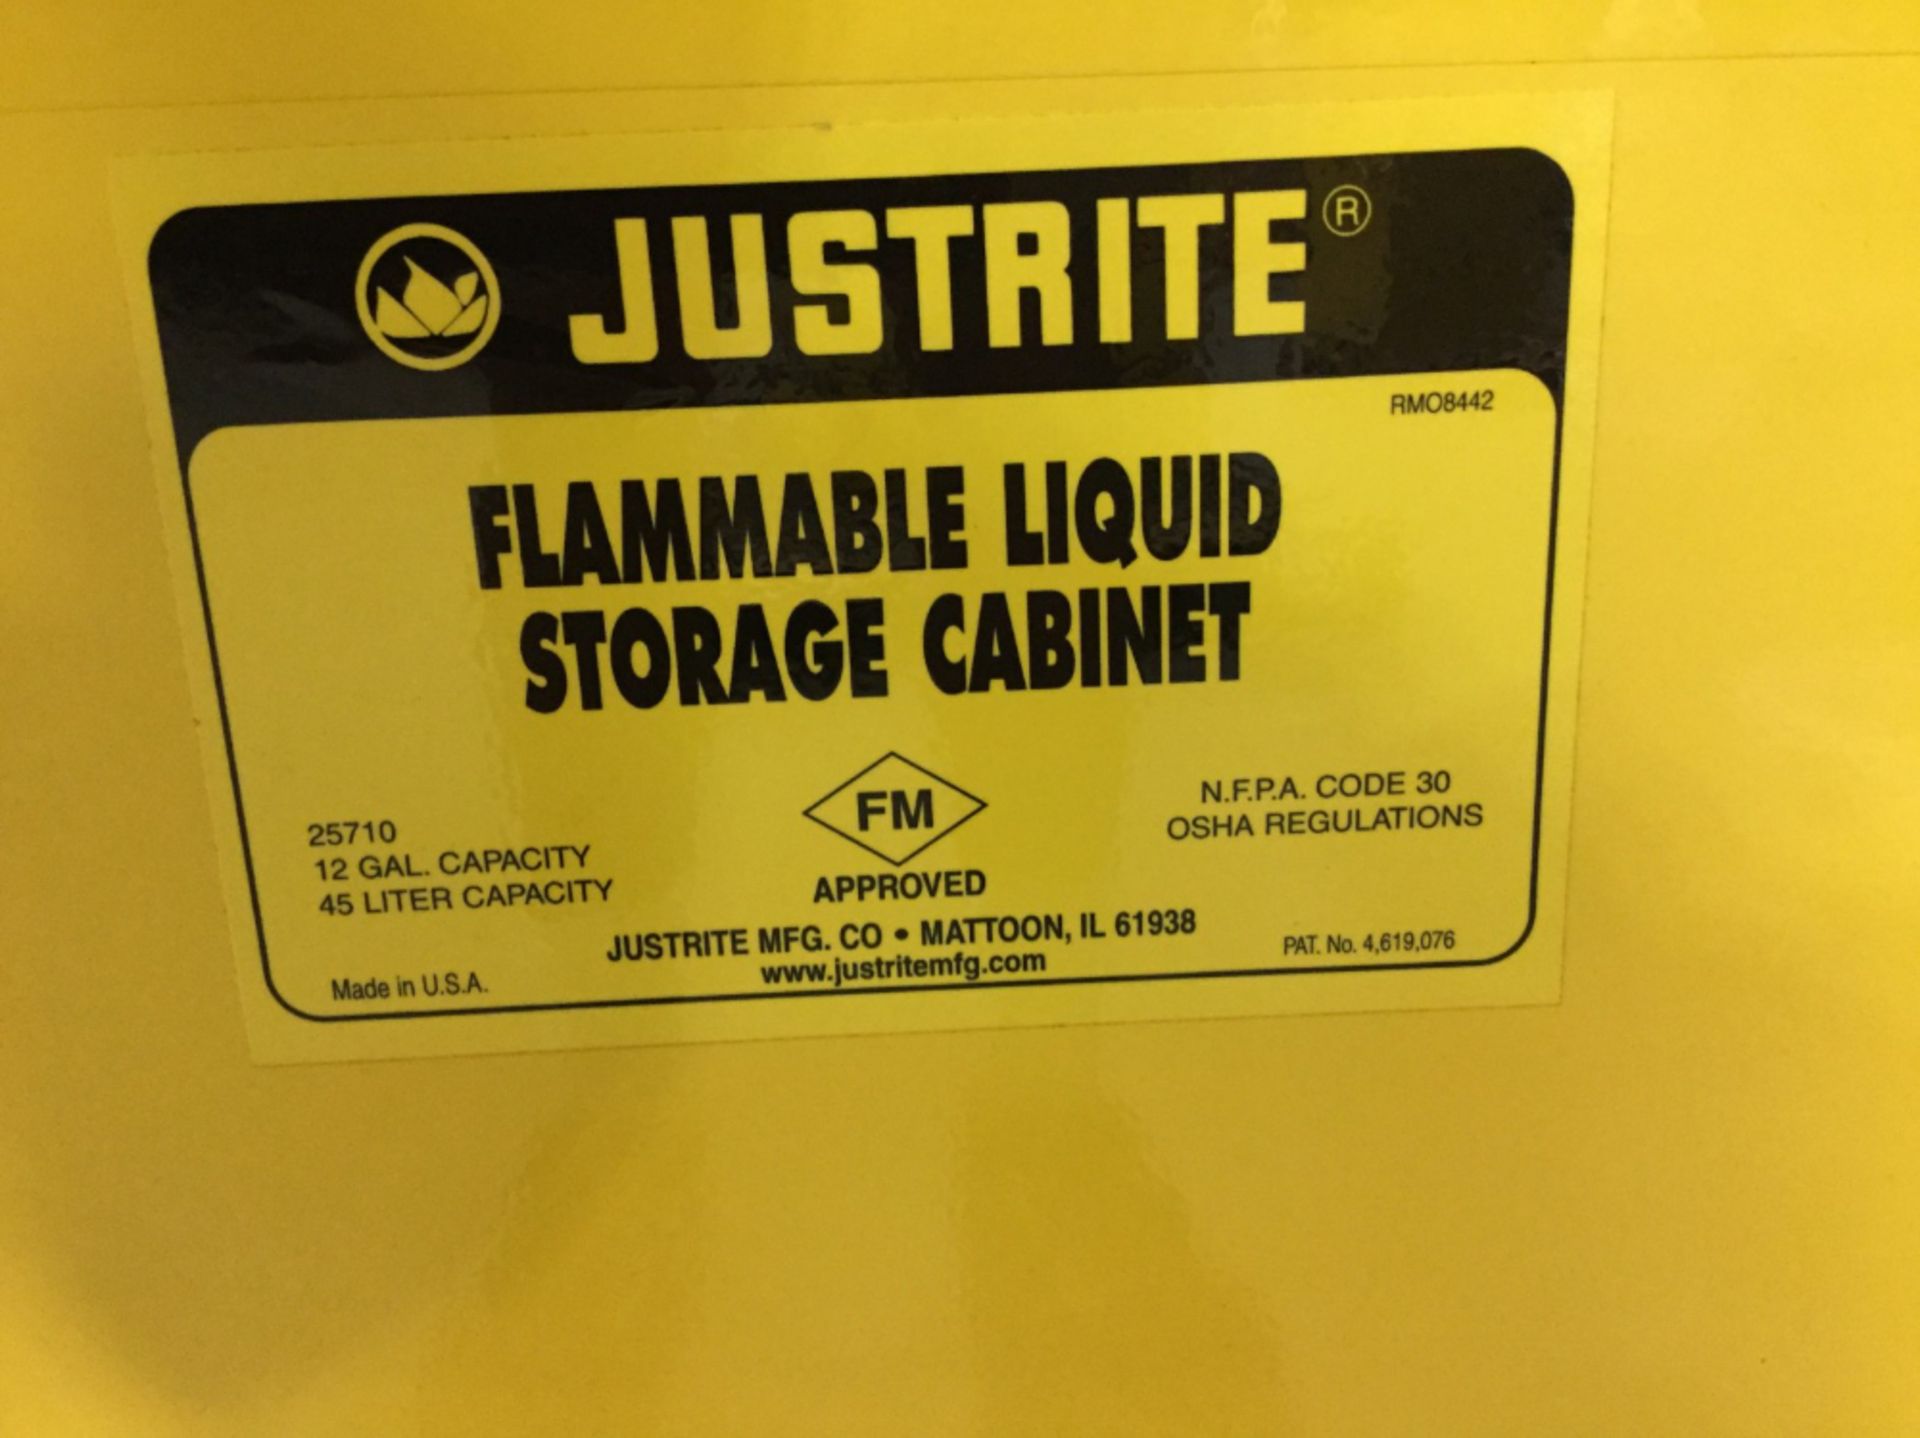 Justrite 12 Gallon Flammable Liquid Storage Cabinet - Image 2 of 3